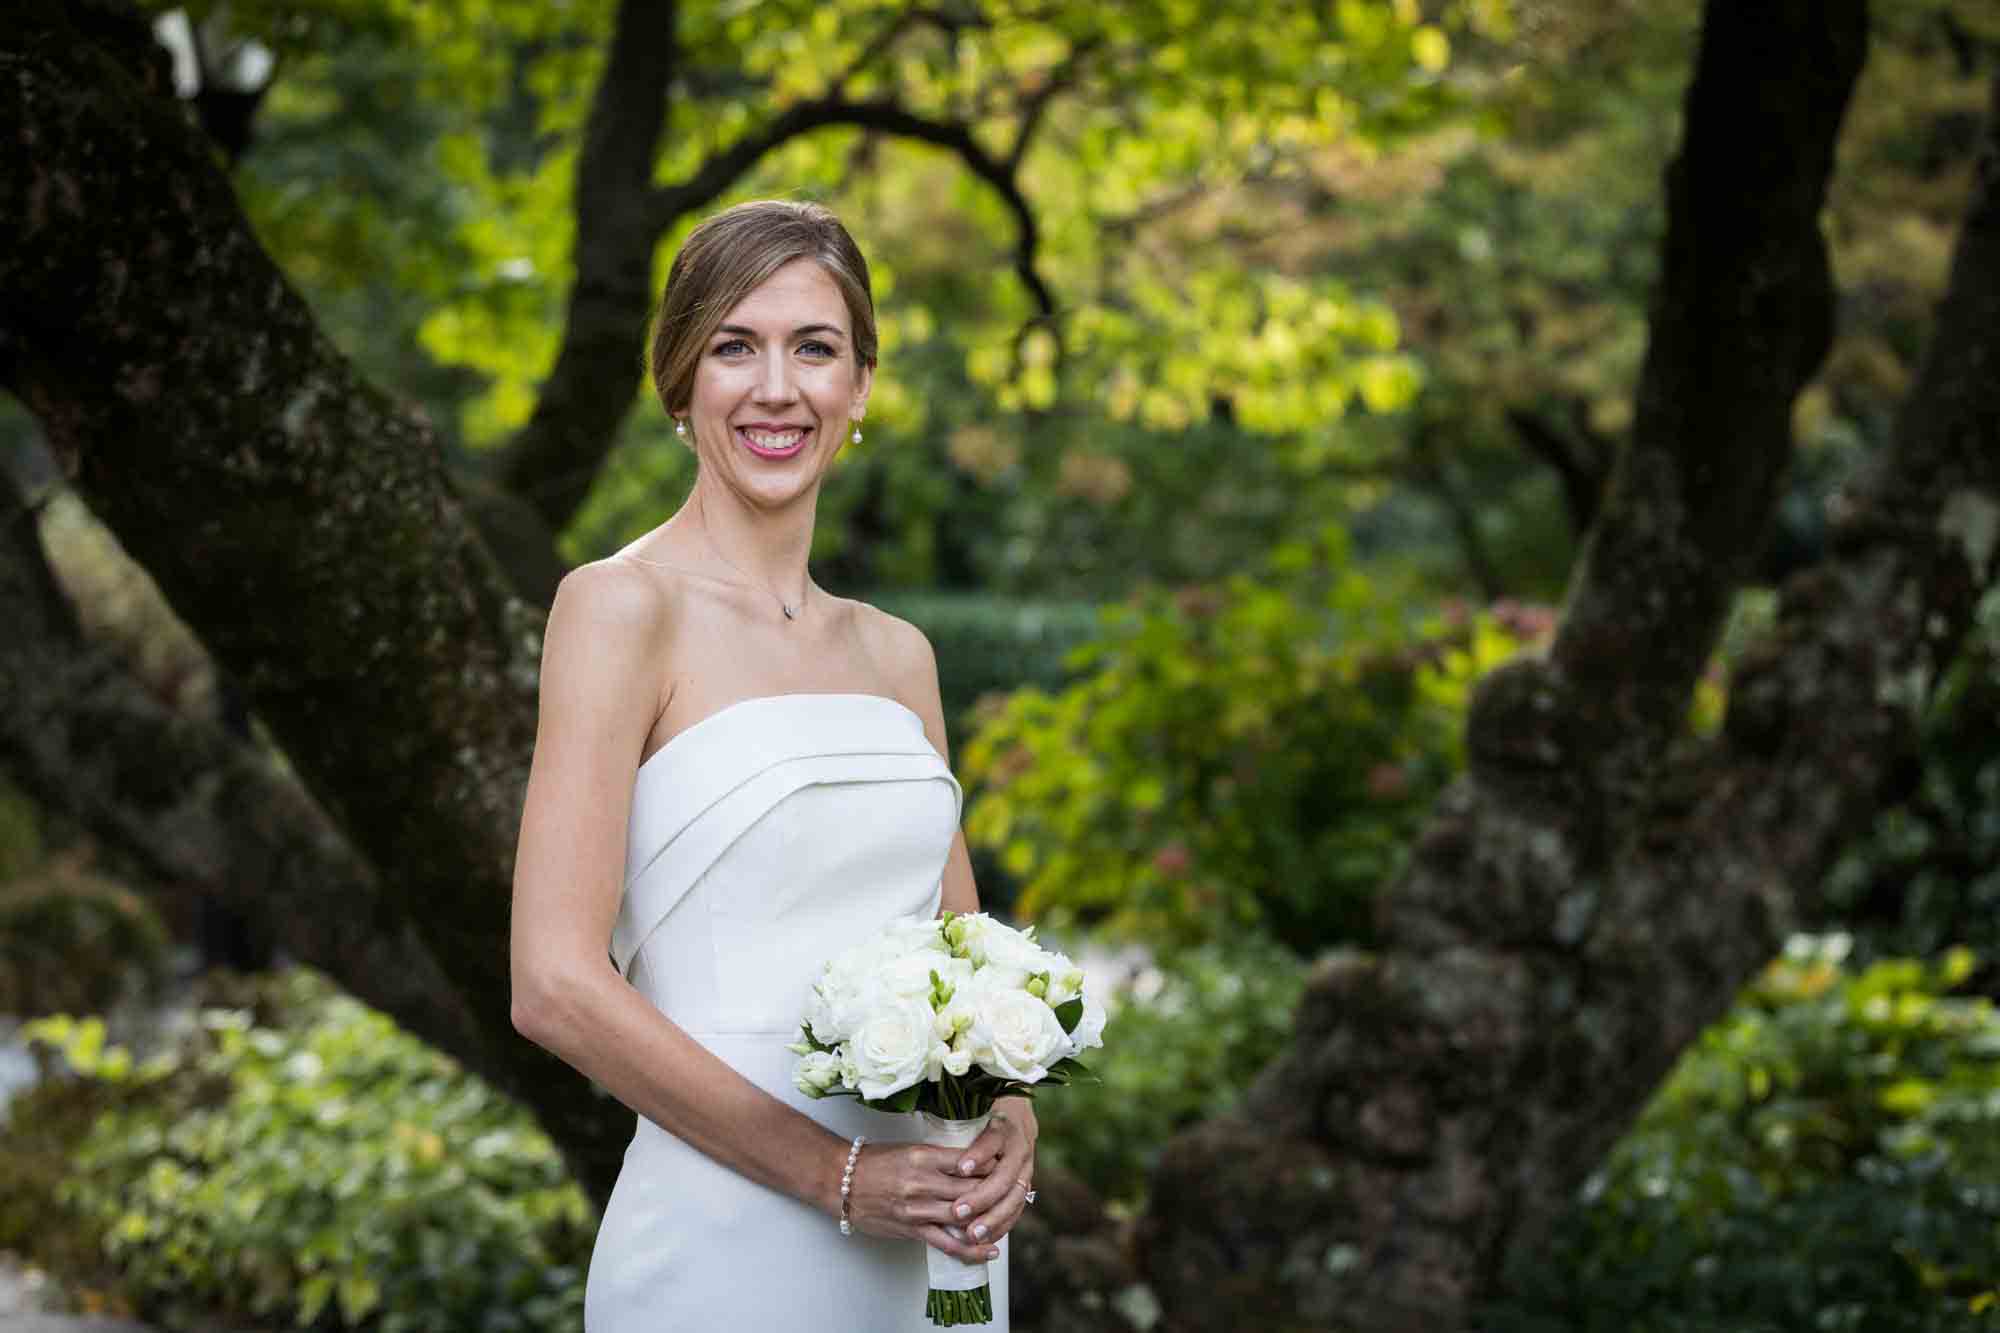 Conservatory Garden wedding photos of bride wearing strapless gown holding flower bouquet